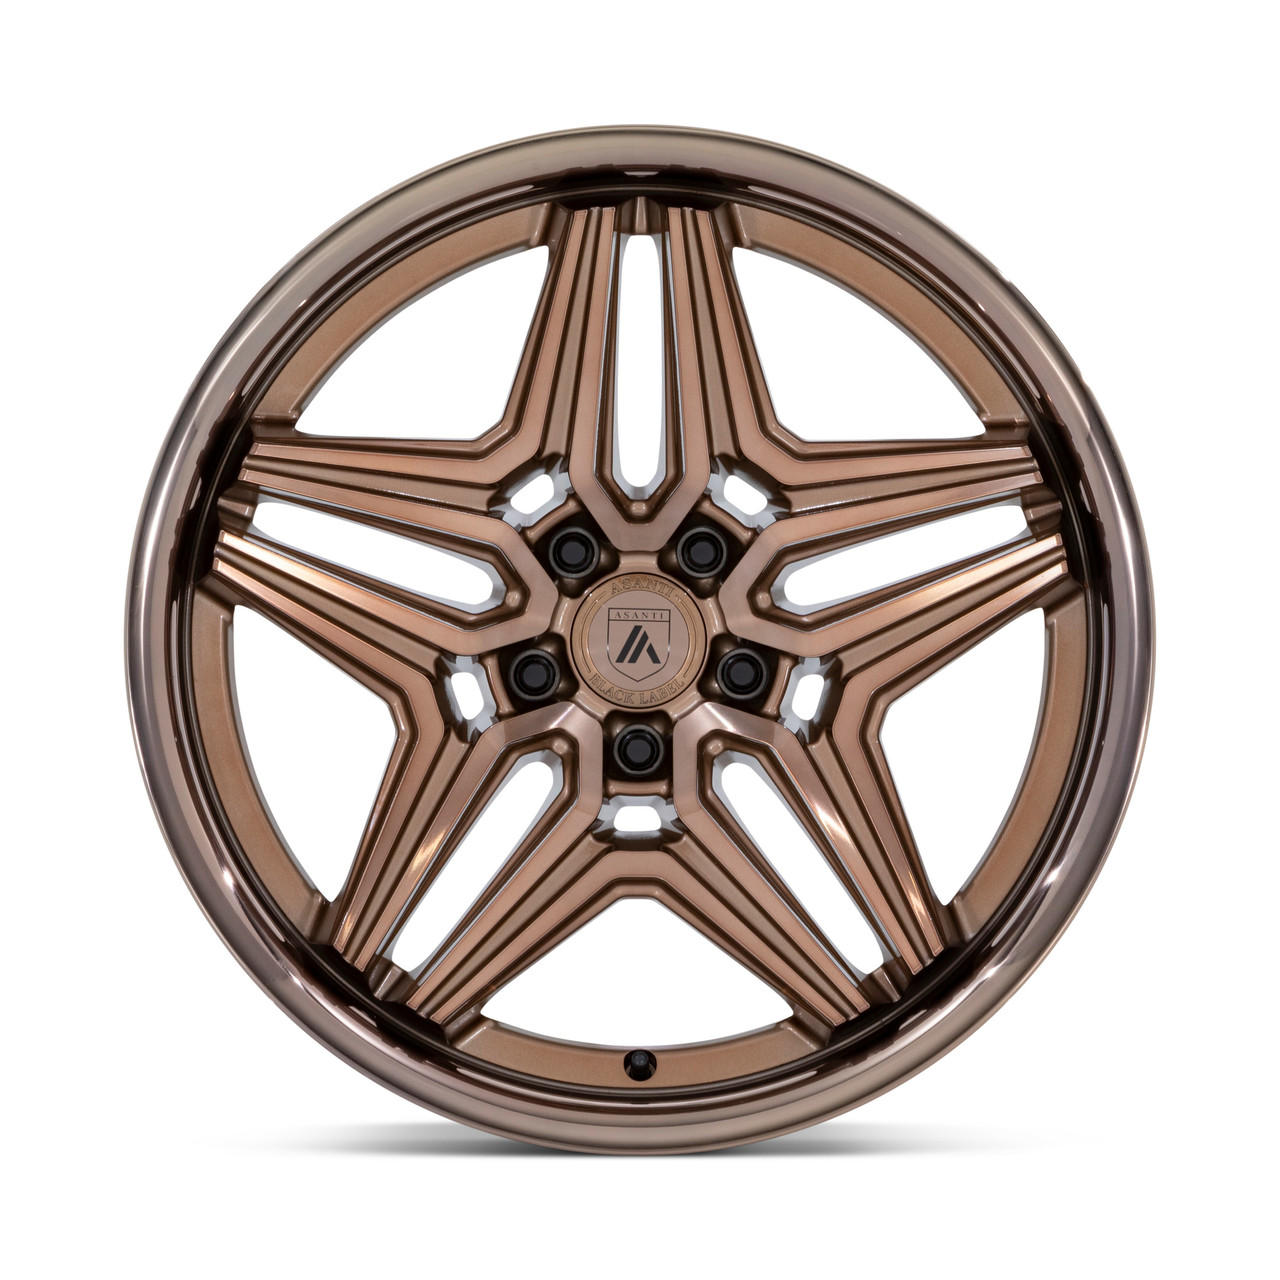 Asanti Black ABL-46 Duke 20x10.5 5x115 Platinum Bronze Wheel 20" 18mm Rim